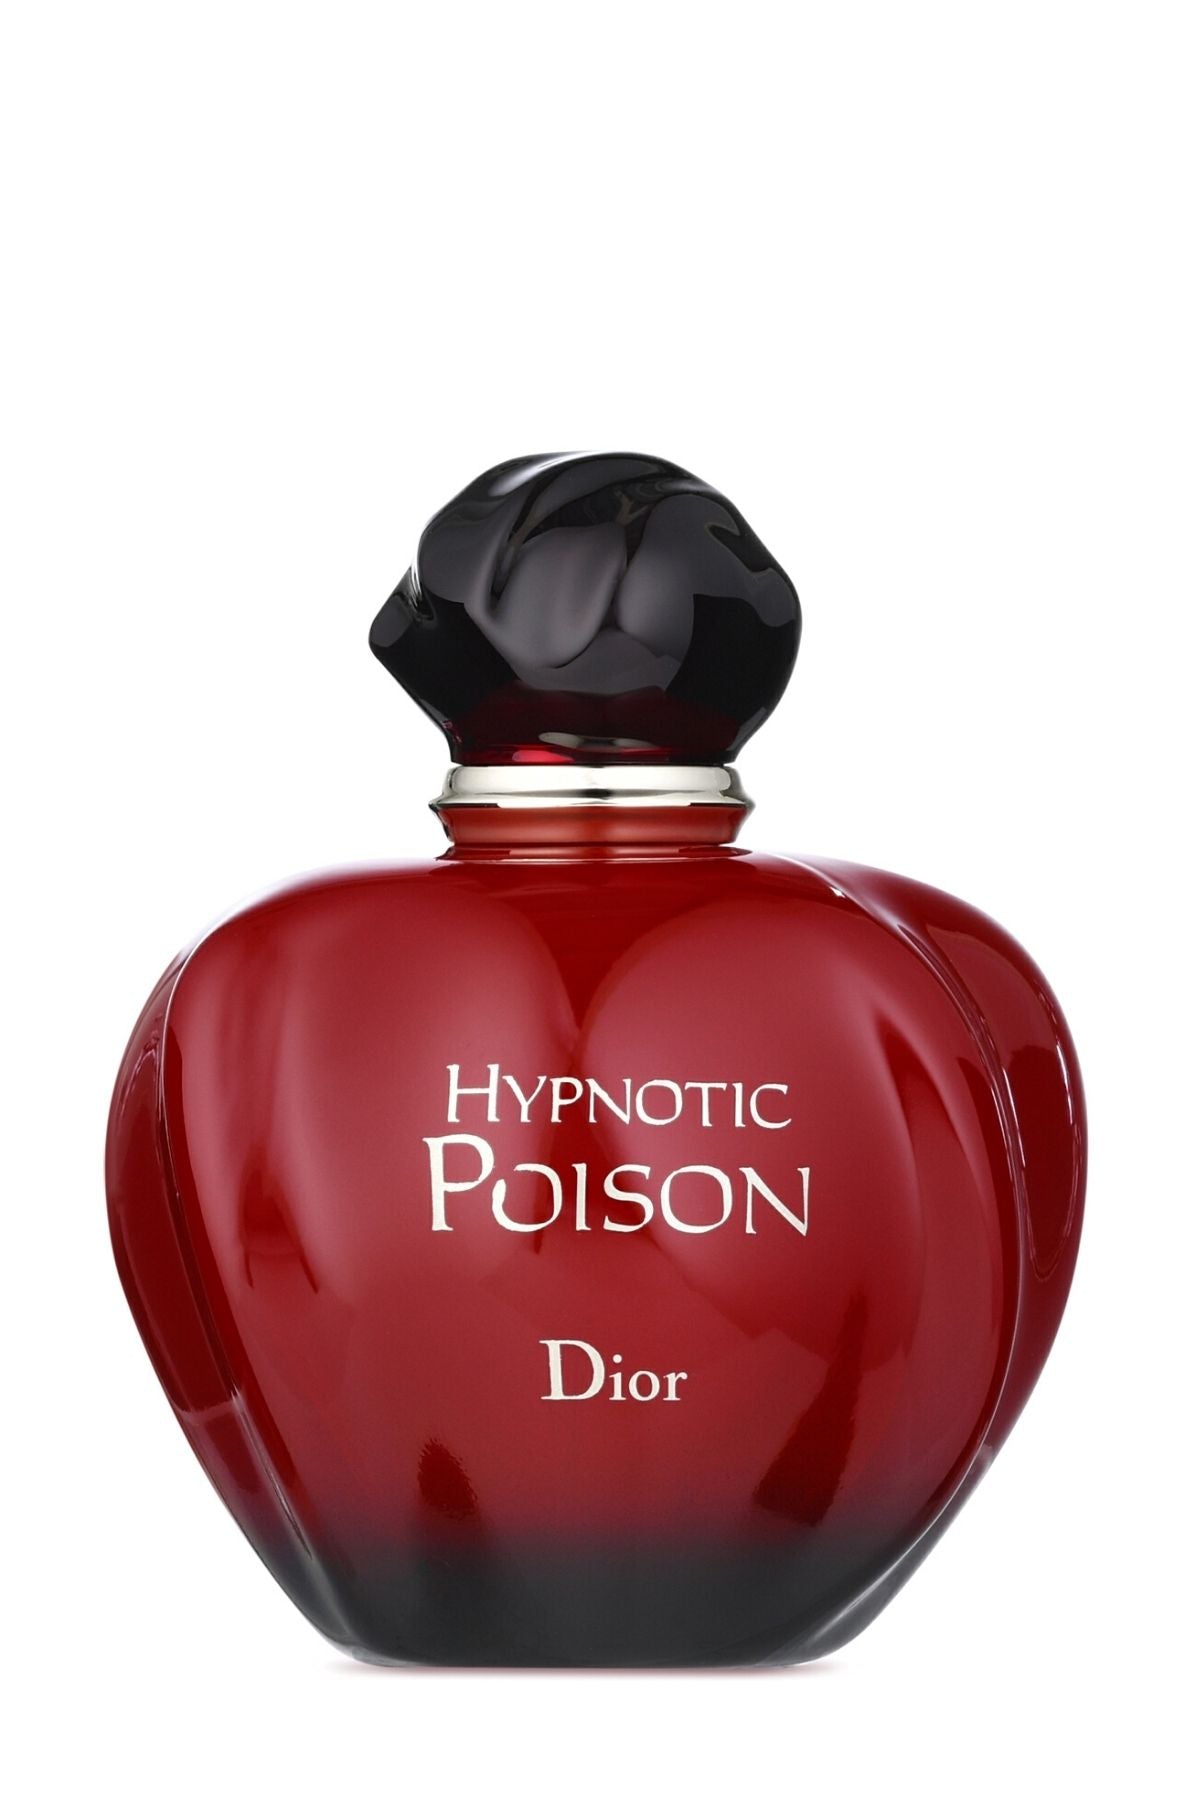 Similar to hypnotic poison - Dior